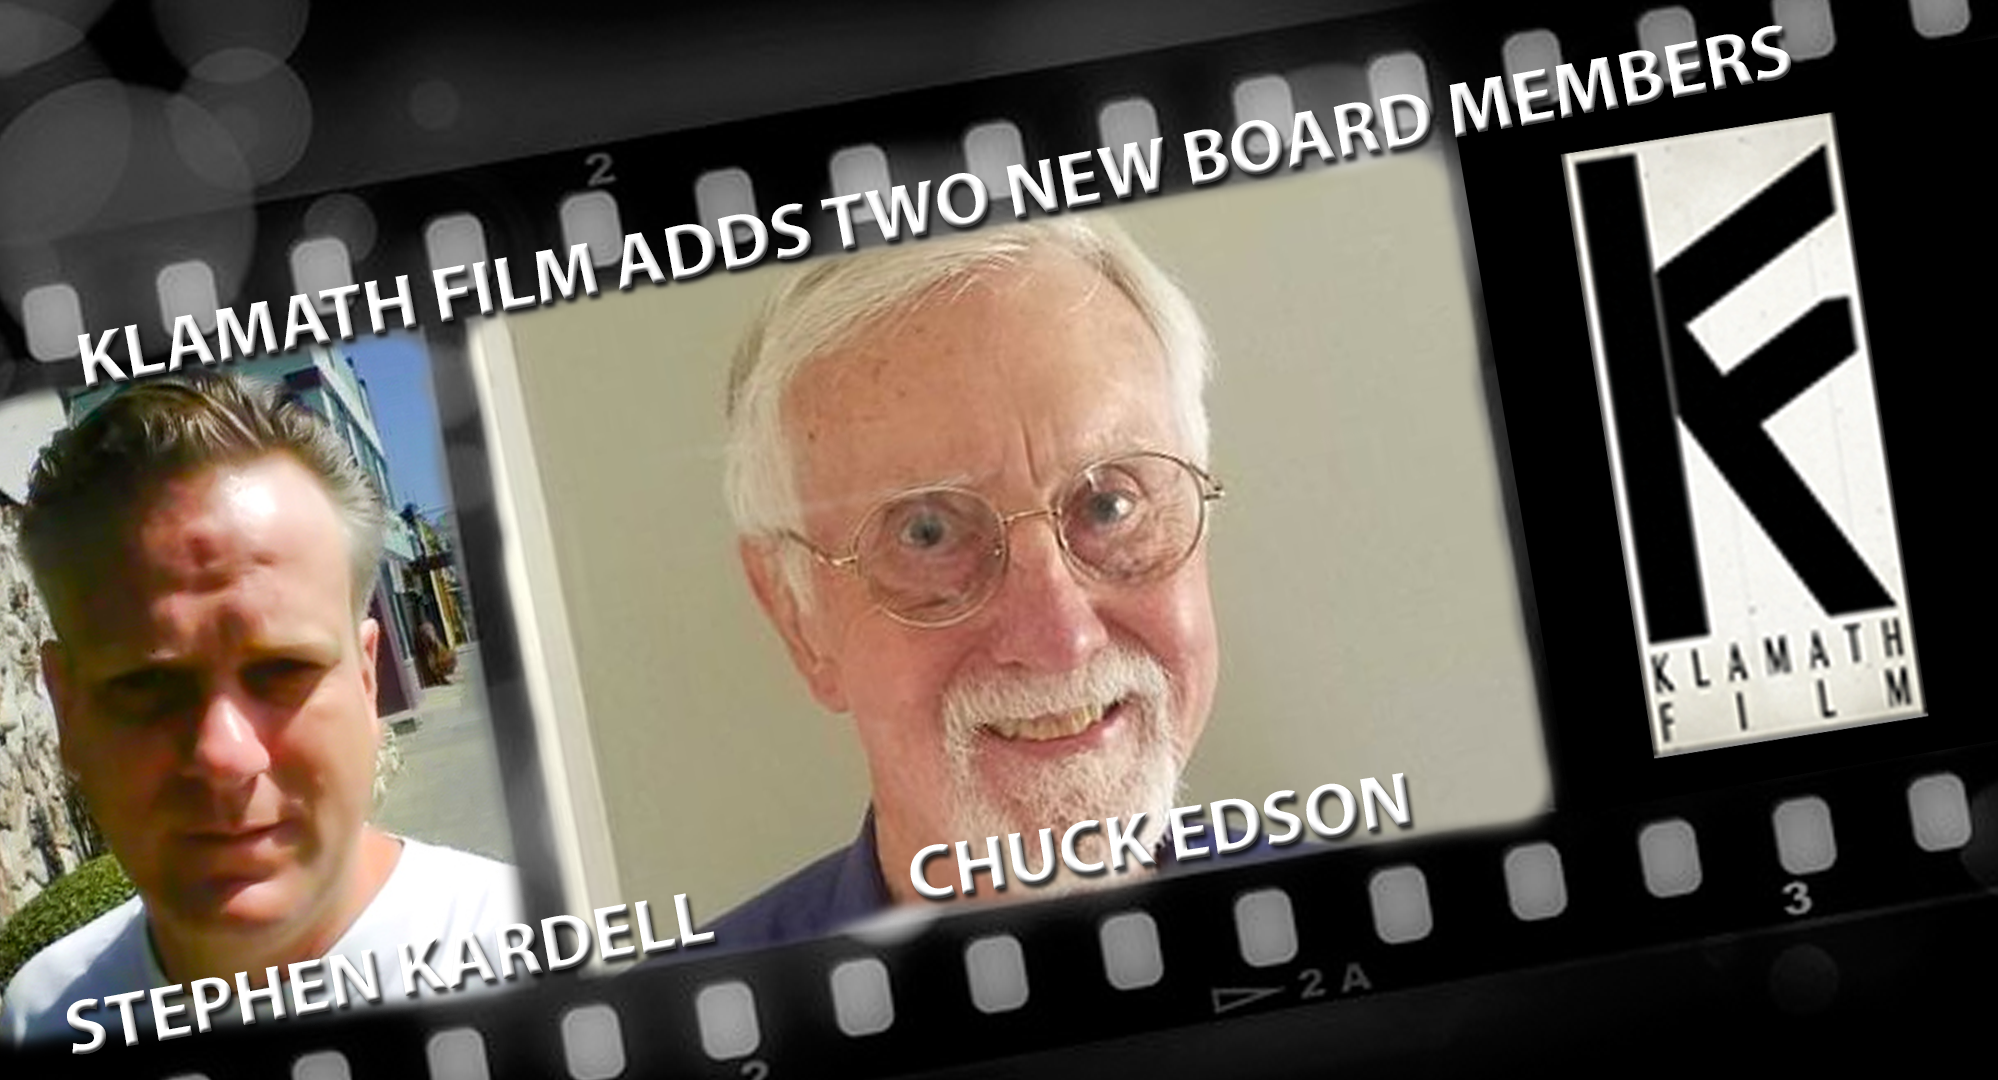 Klamath Film adds two new board members